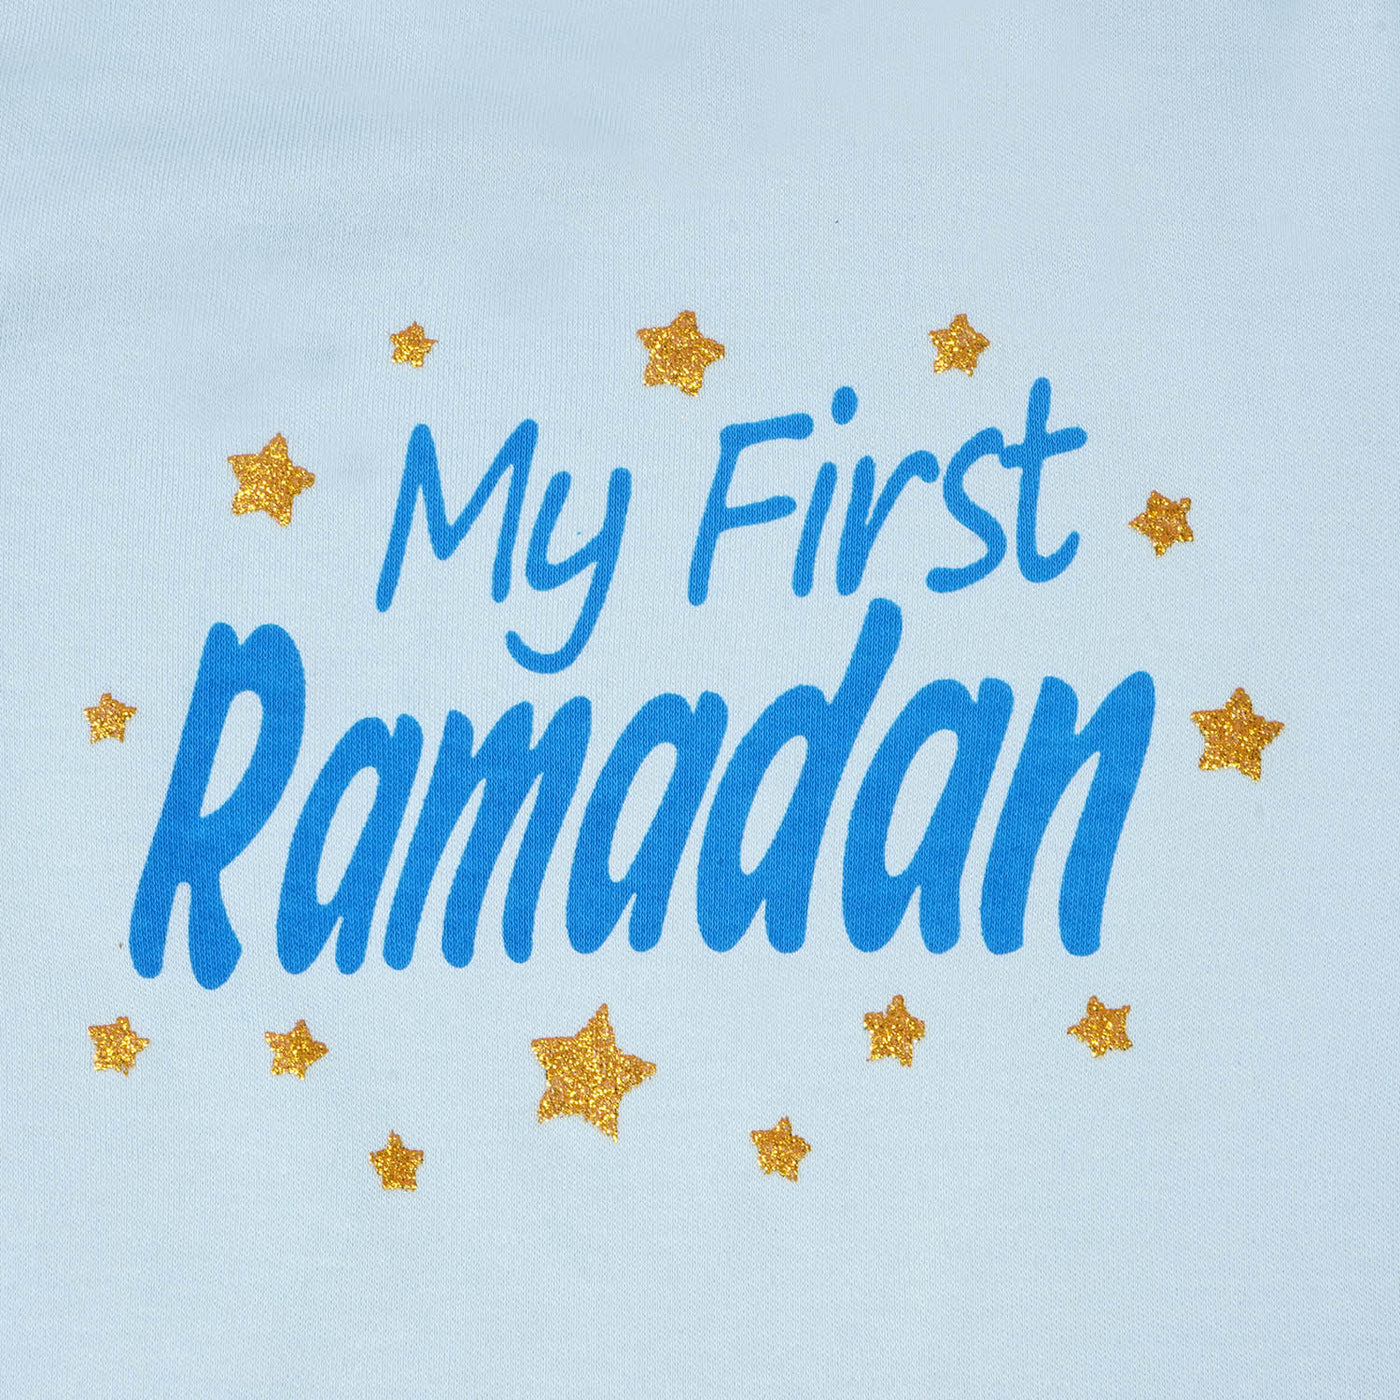 Infant Unisex Cotton Romper First Ramadan - Blue